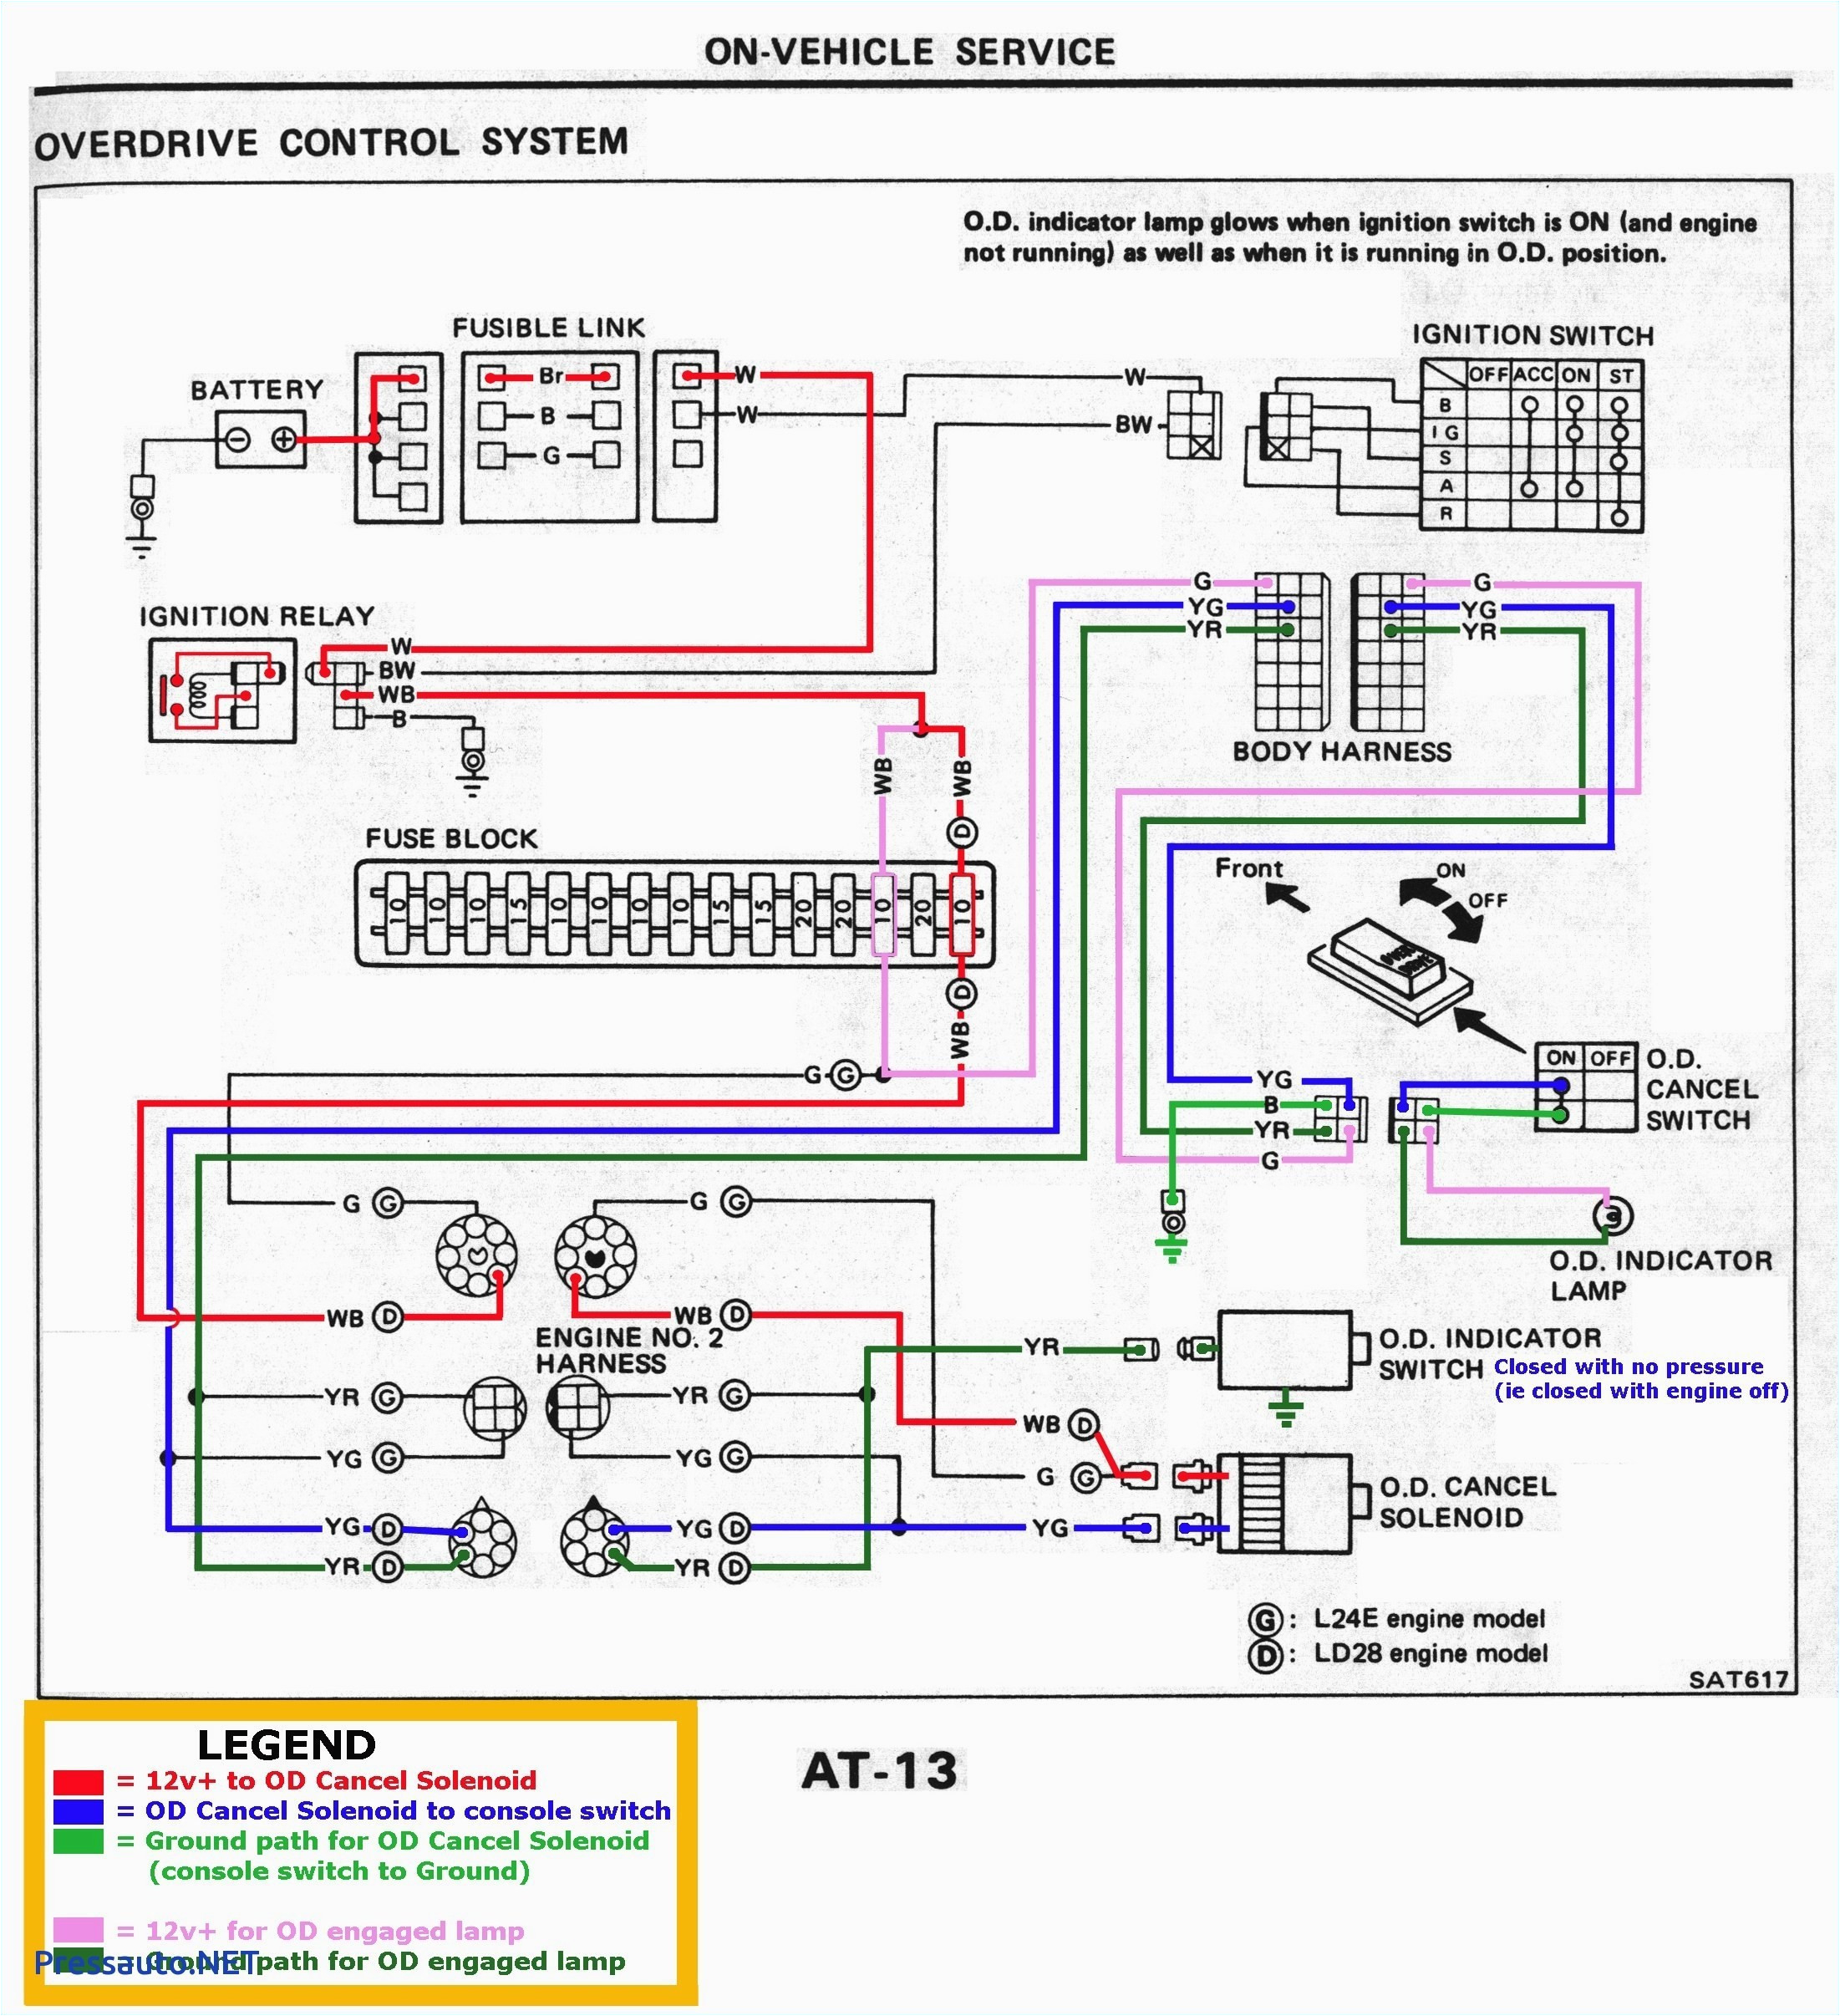 Towbar Buzzer Wiring Diagram Bmw towbar Wiring Diagram Wiring Diagram Ebook